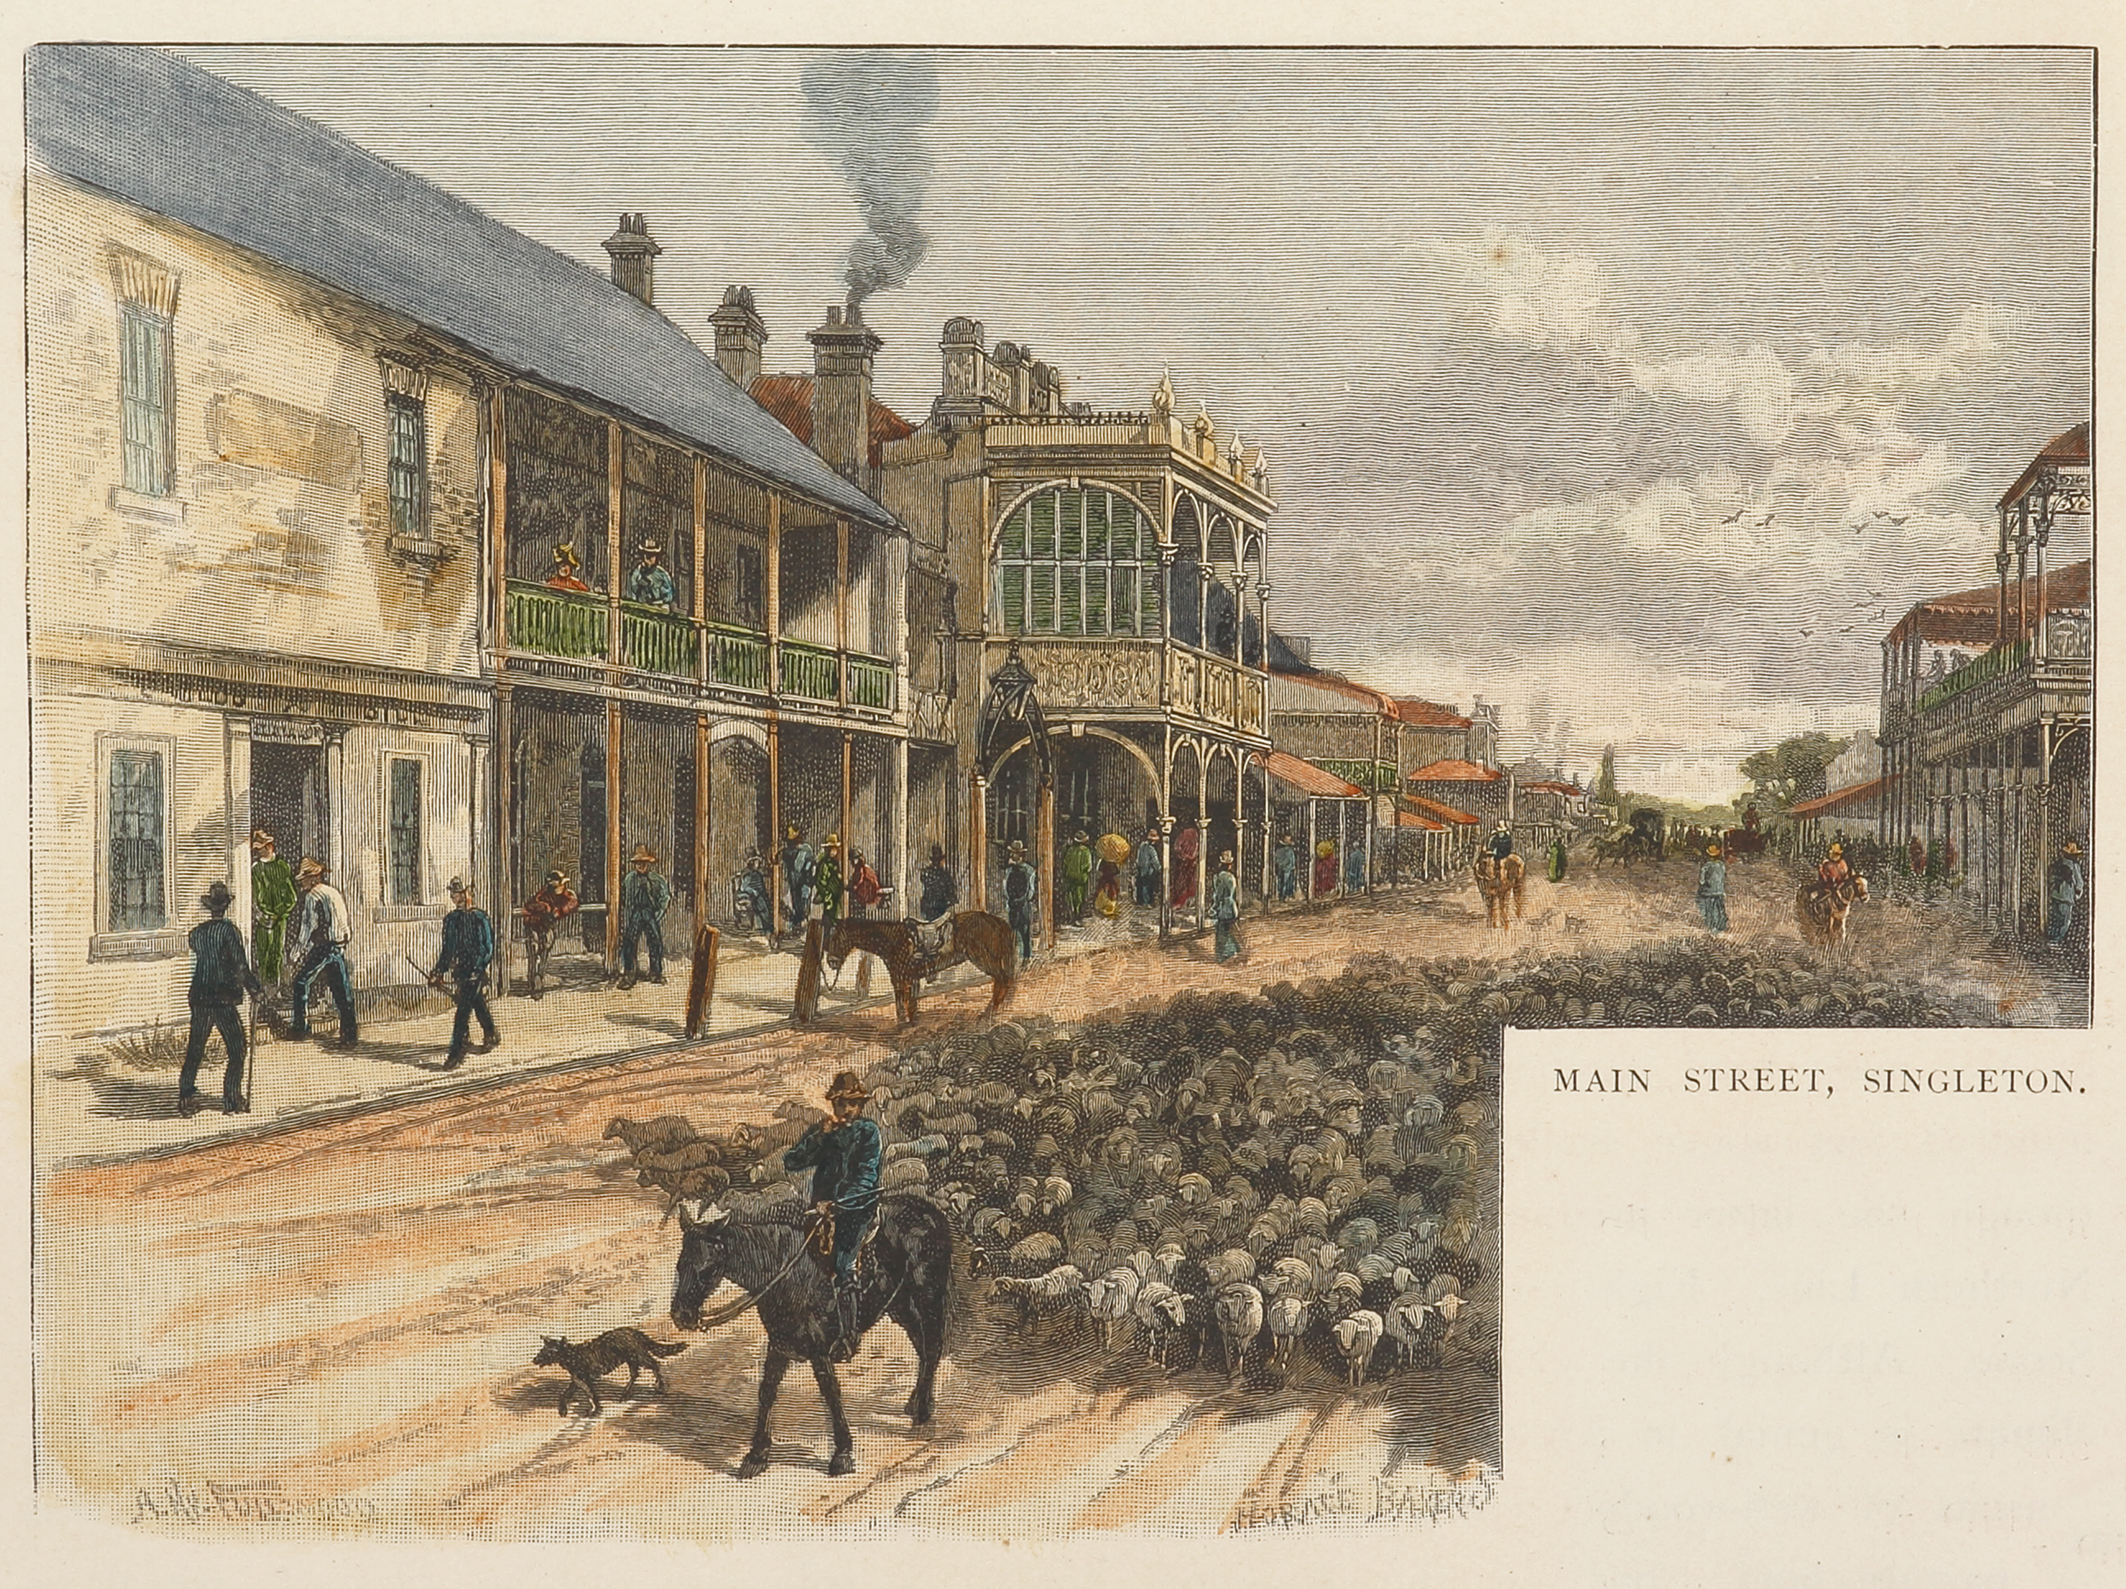 Main Street, Singleton - Antique View from 1886